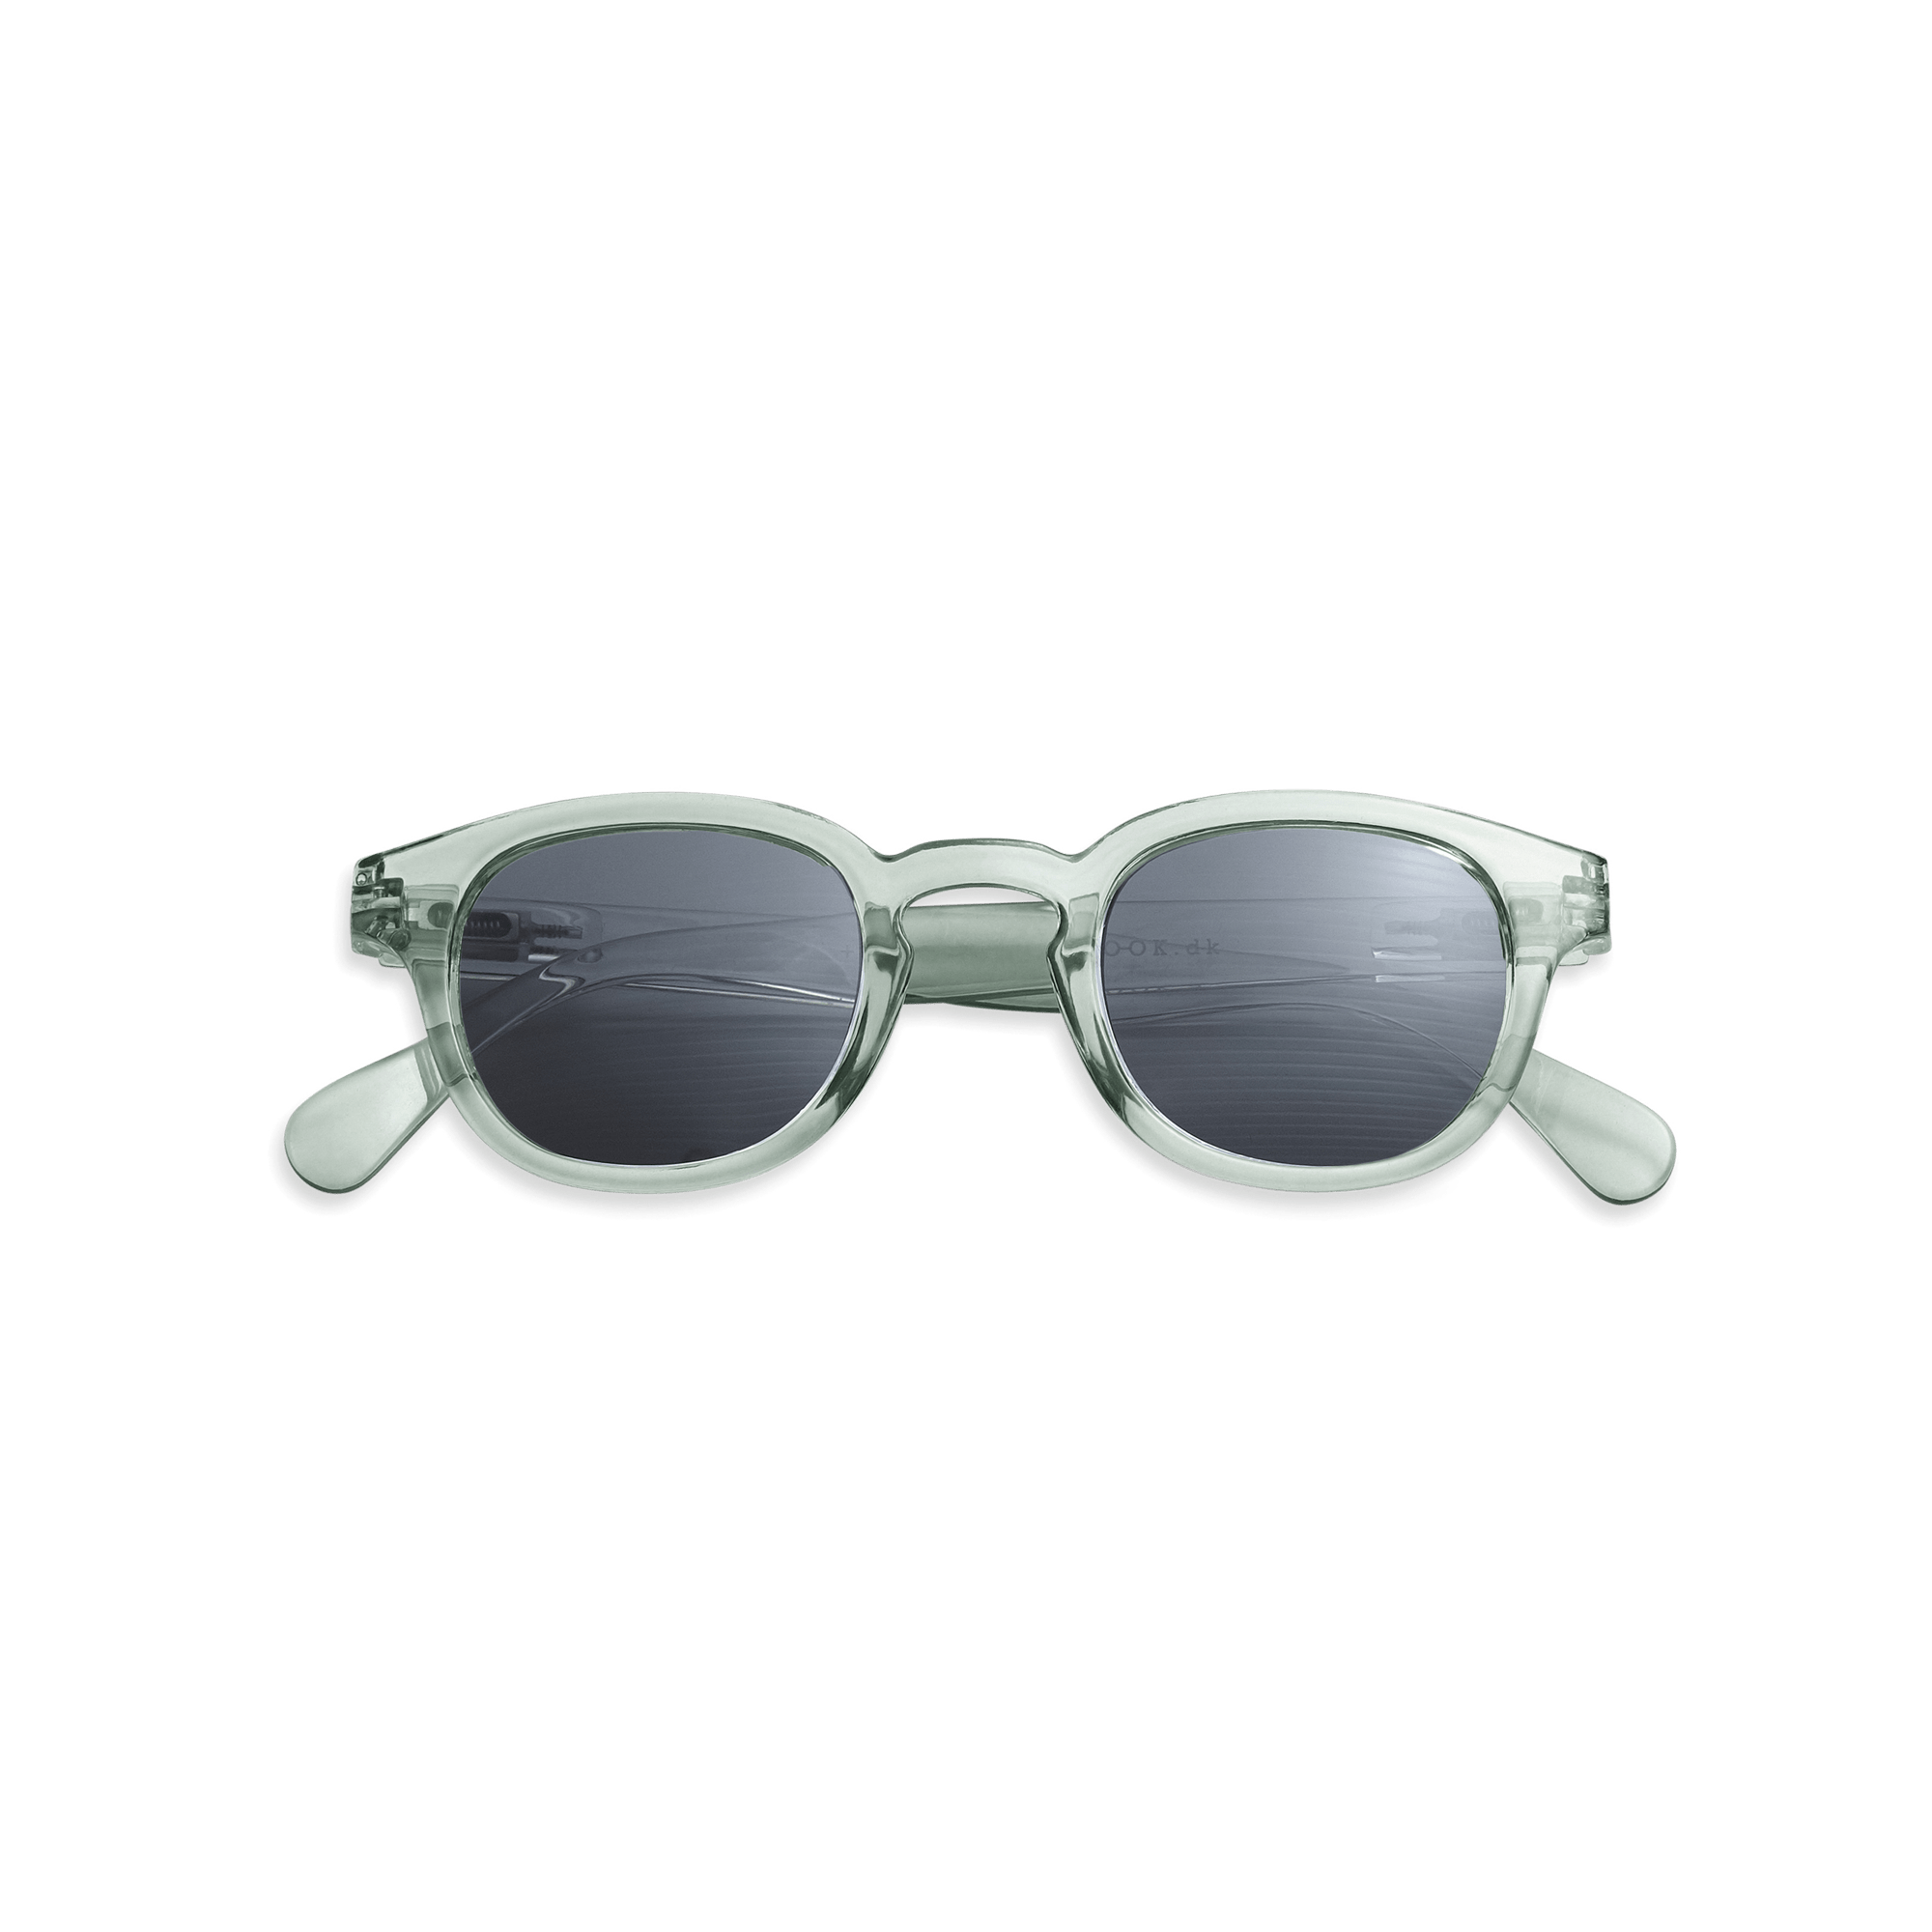 Sunglasses Type C - grass